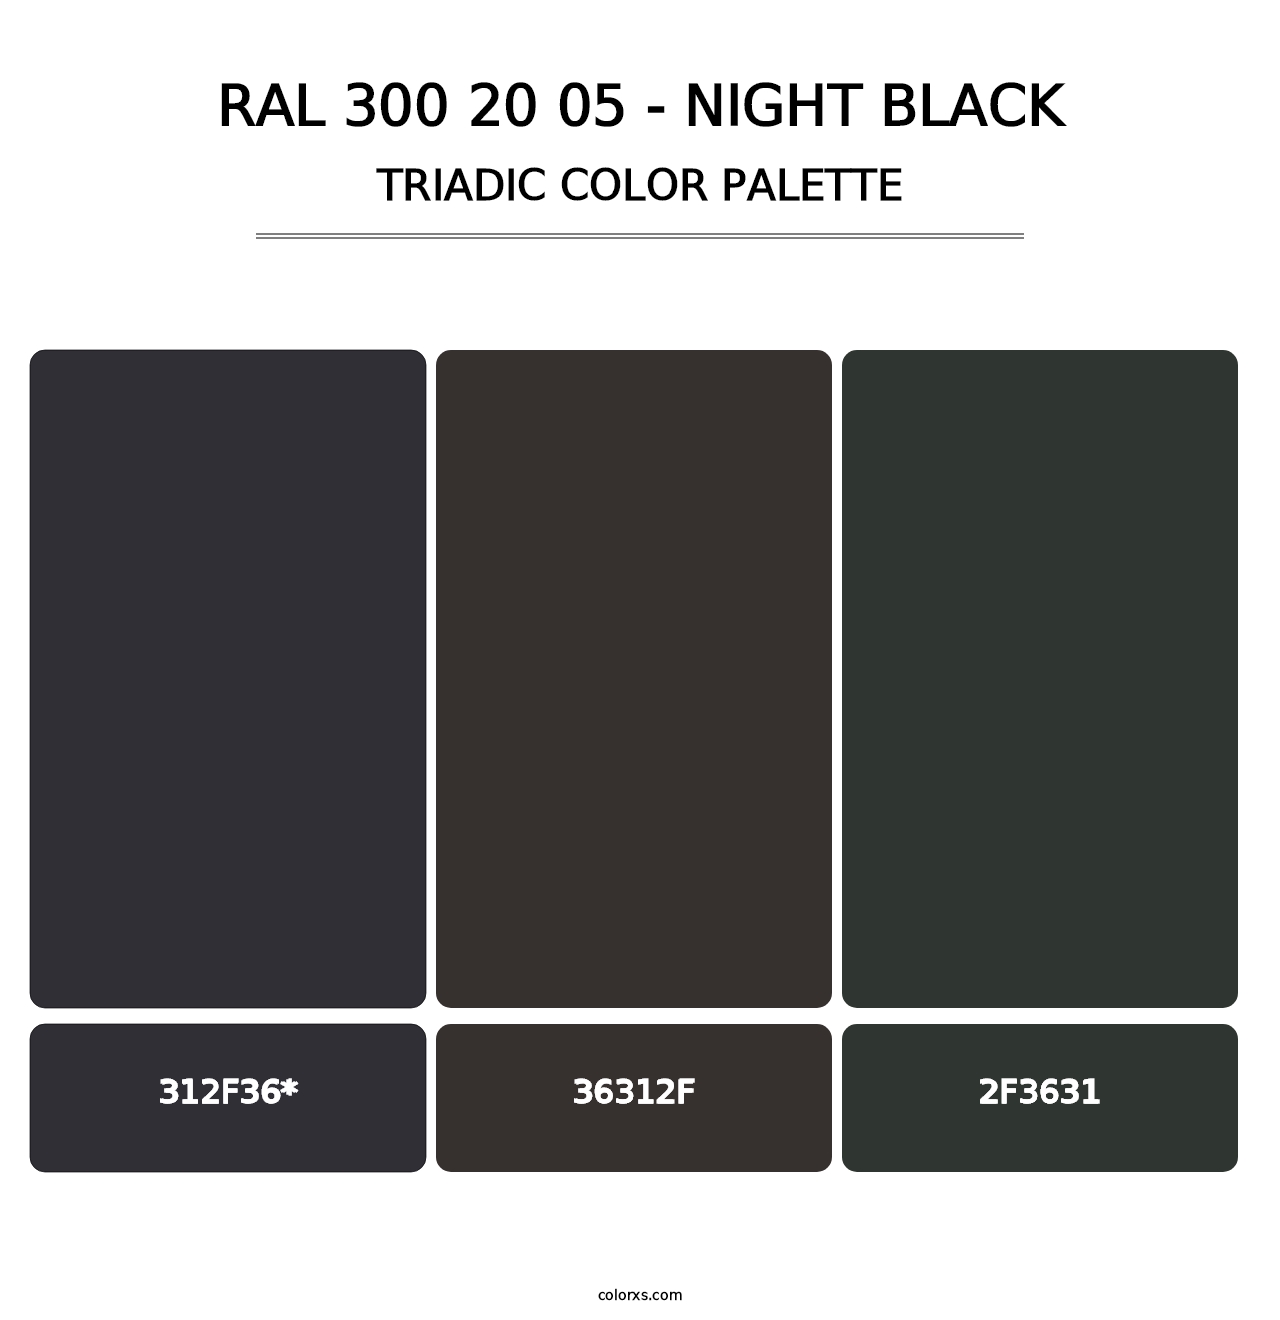 RAL 300 20 05 - Night Black - Triadic Color Palette